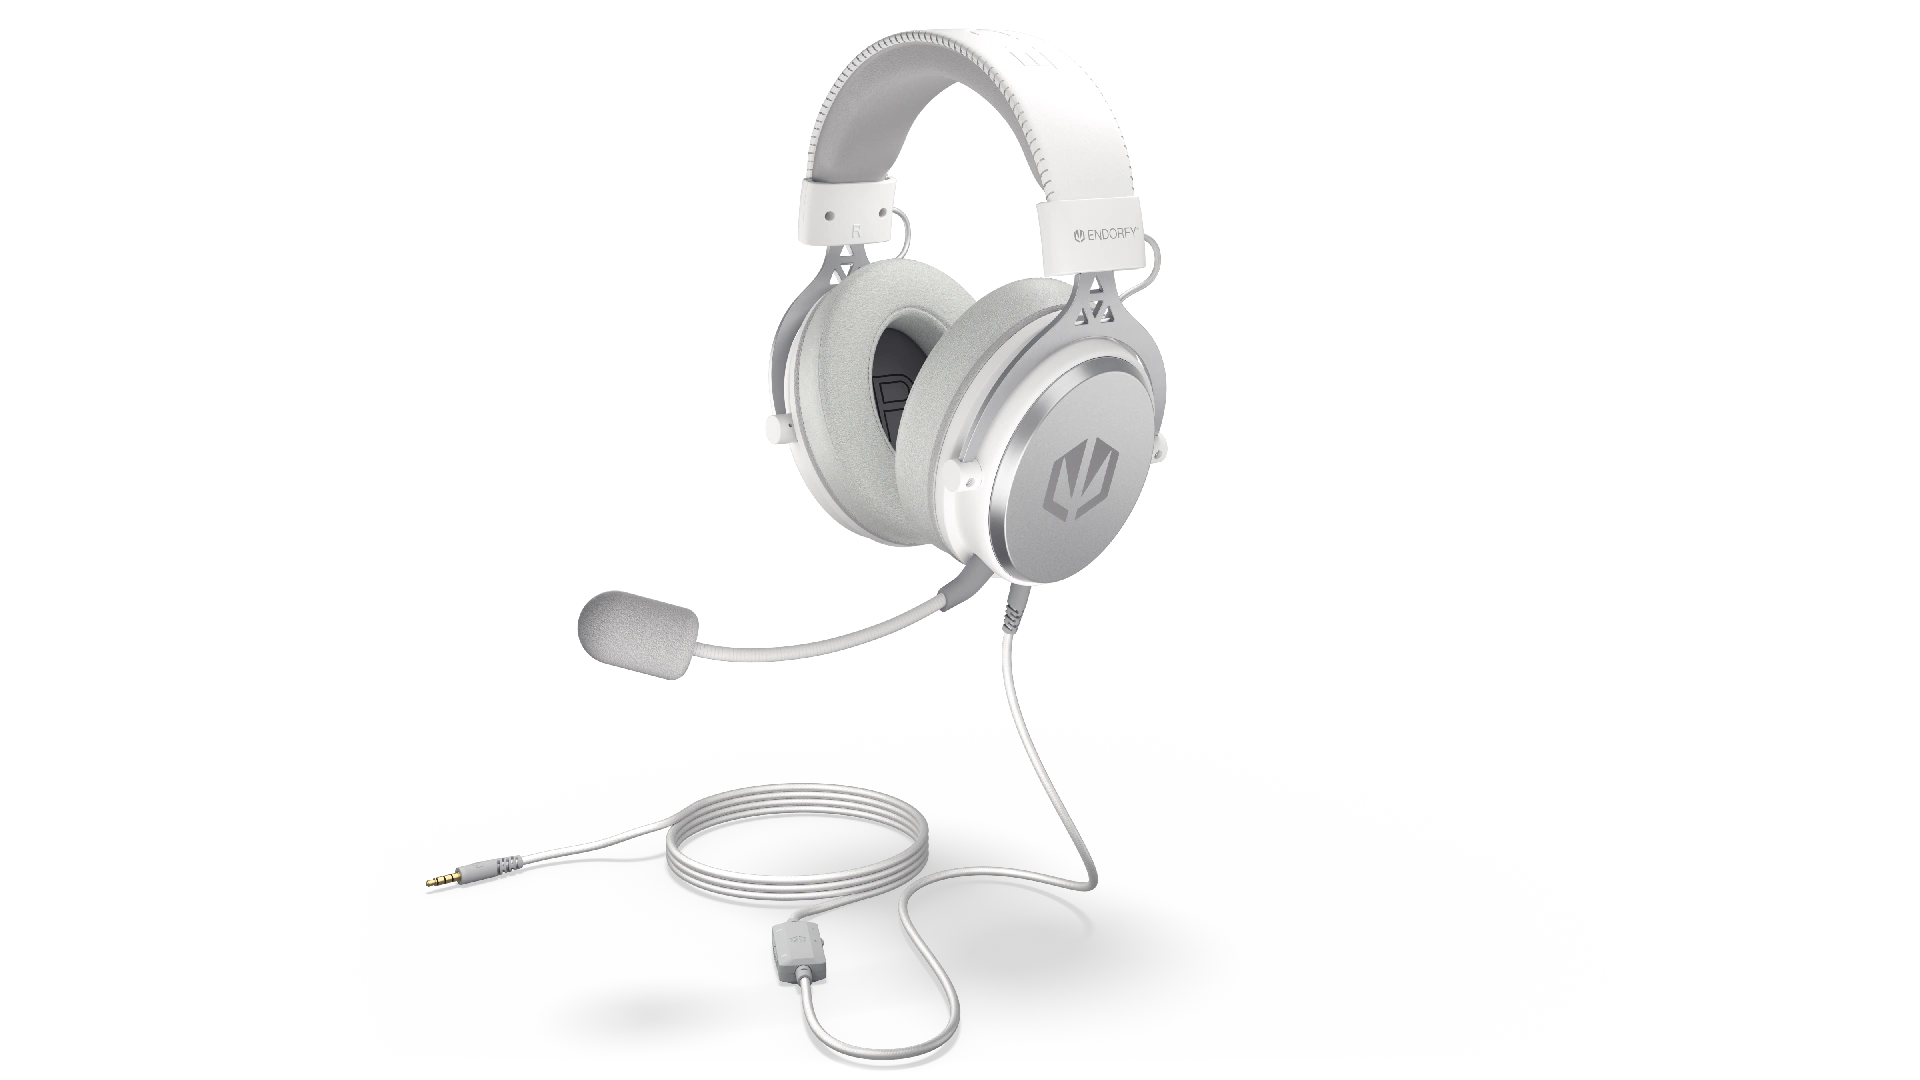 ENDORFY Viro Onyx White, kabelgebundenes Headset